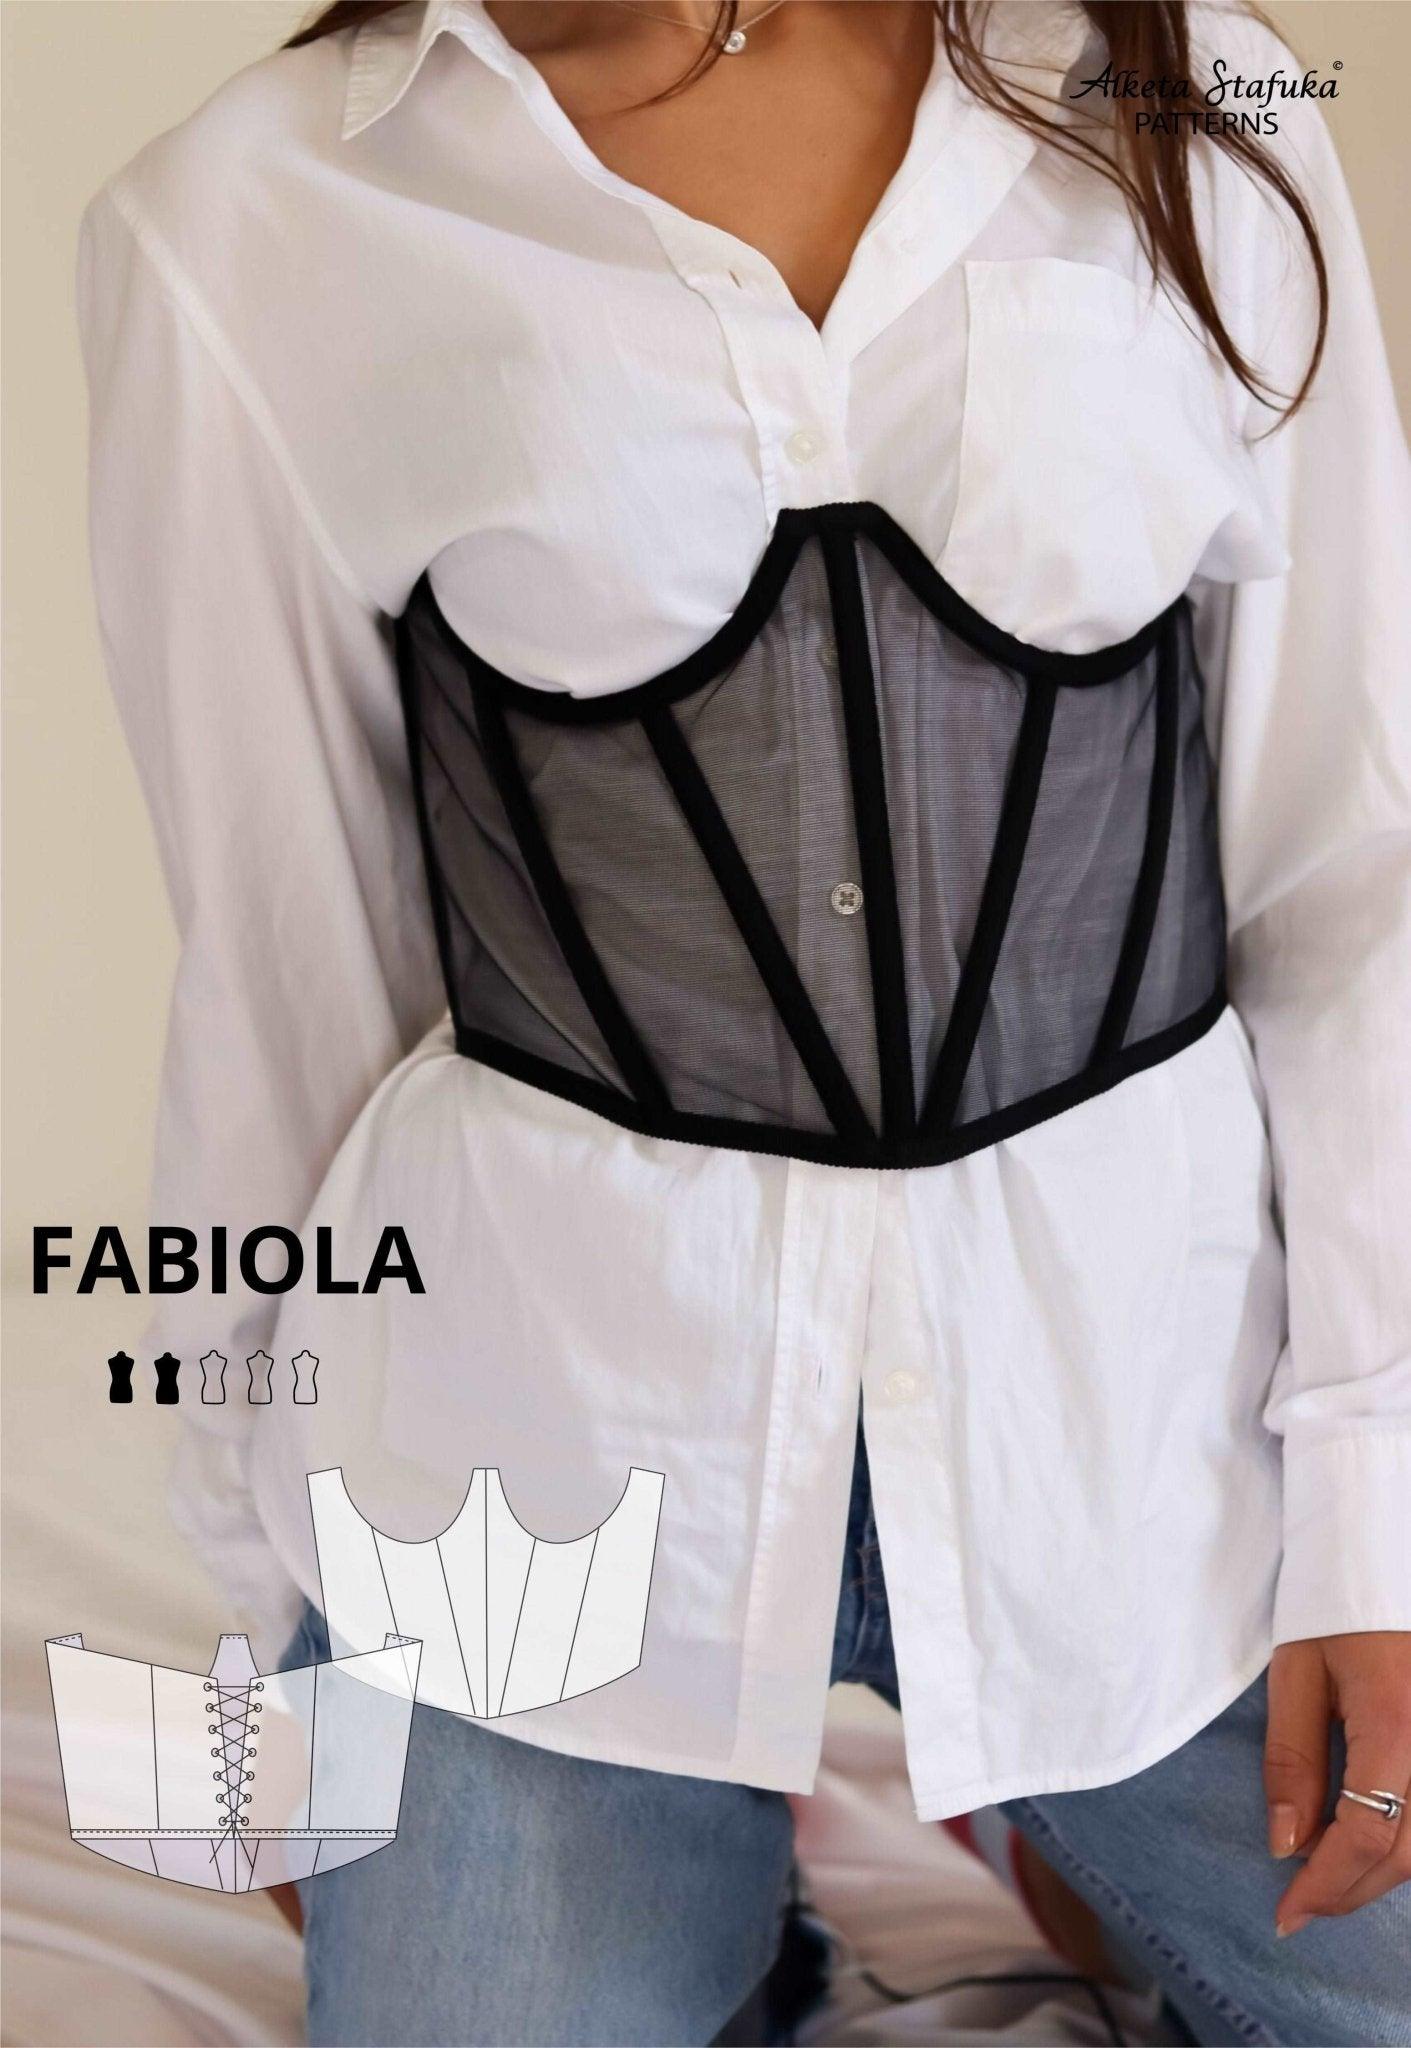 Fabiola Underbust Corset Sewing Pattern